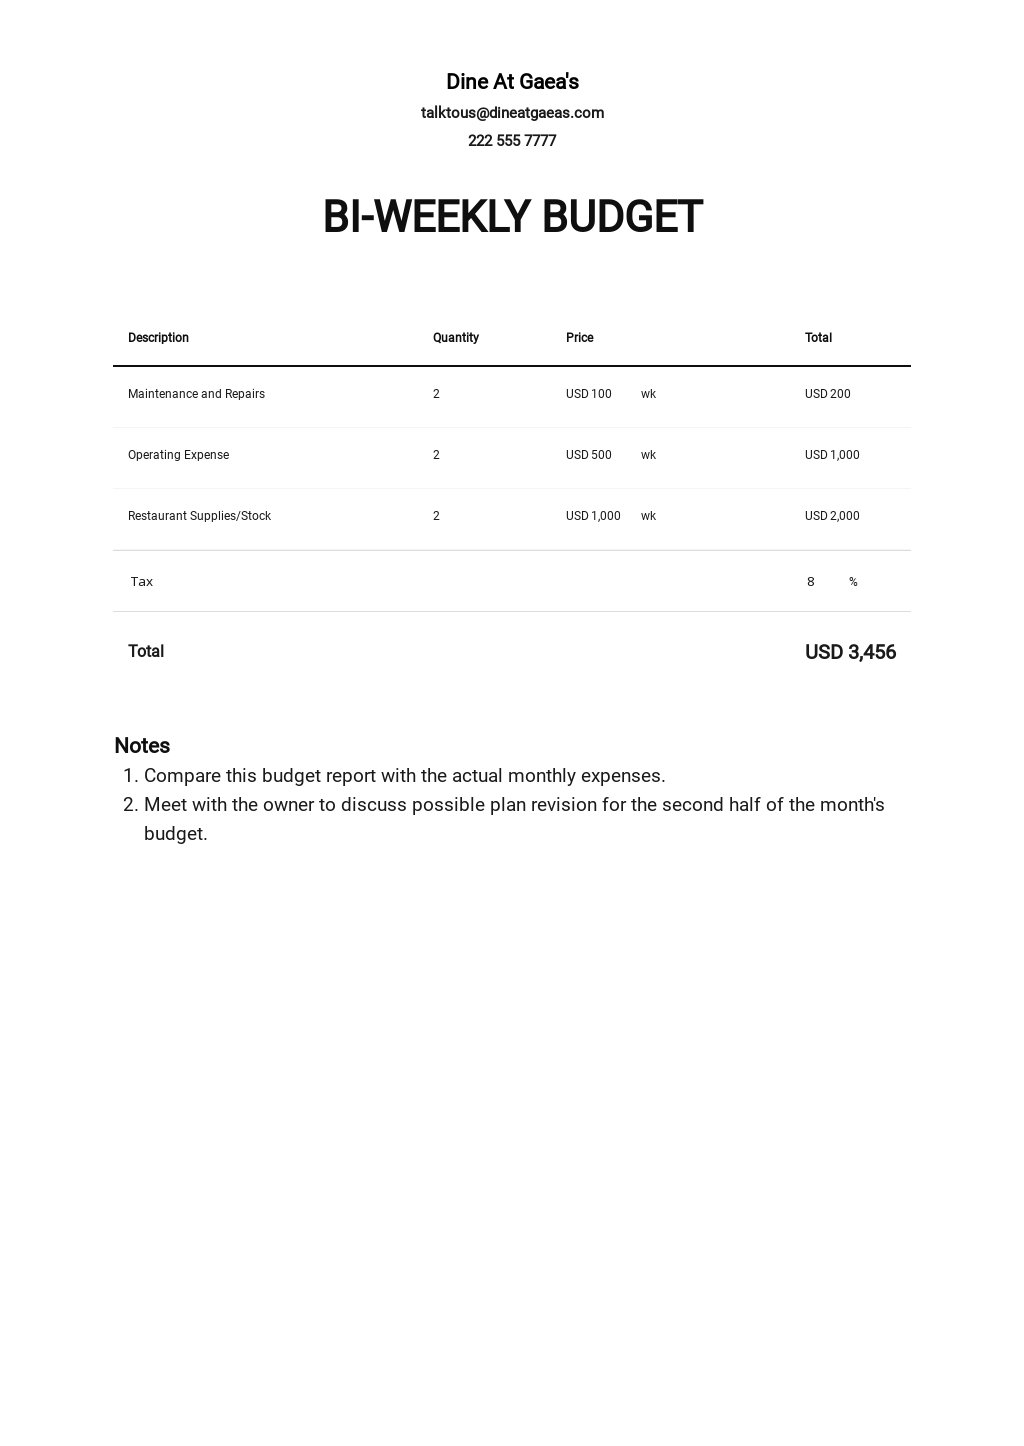 bi-weekly-budget-examples-9-samples-in-google-docs-google-sheets